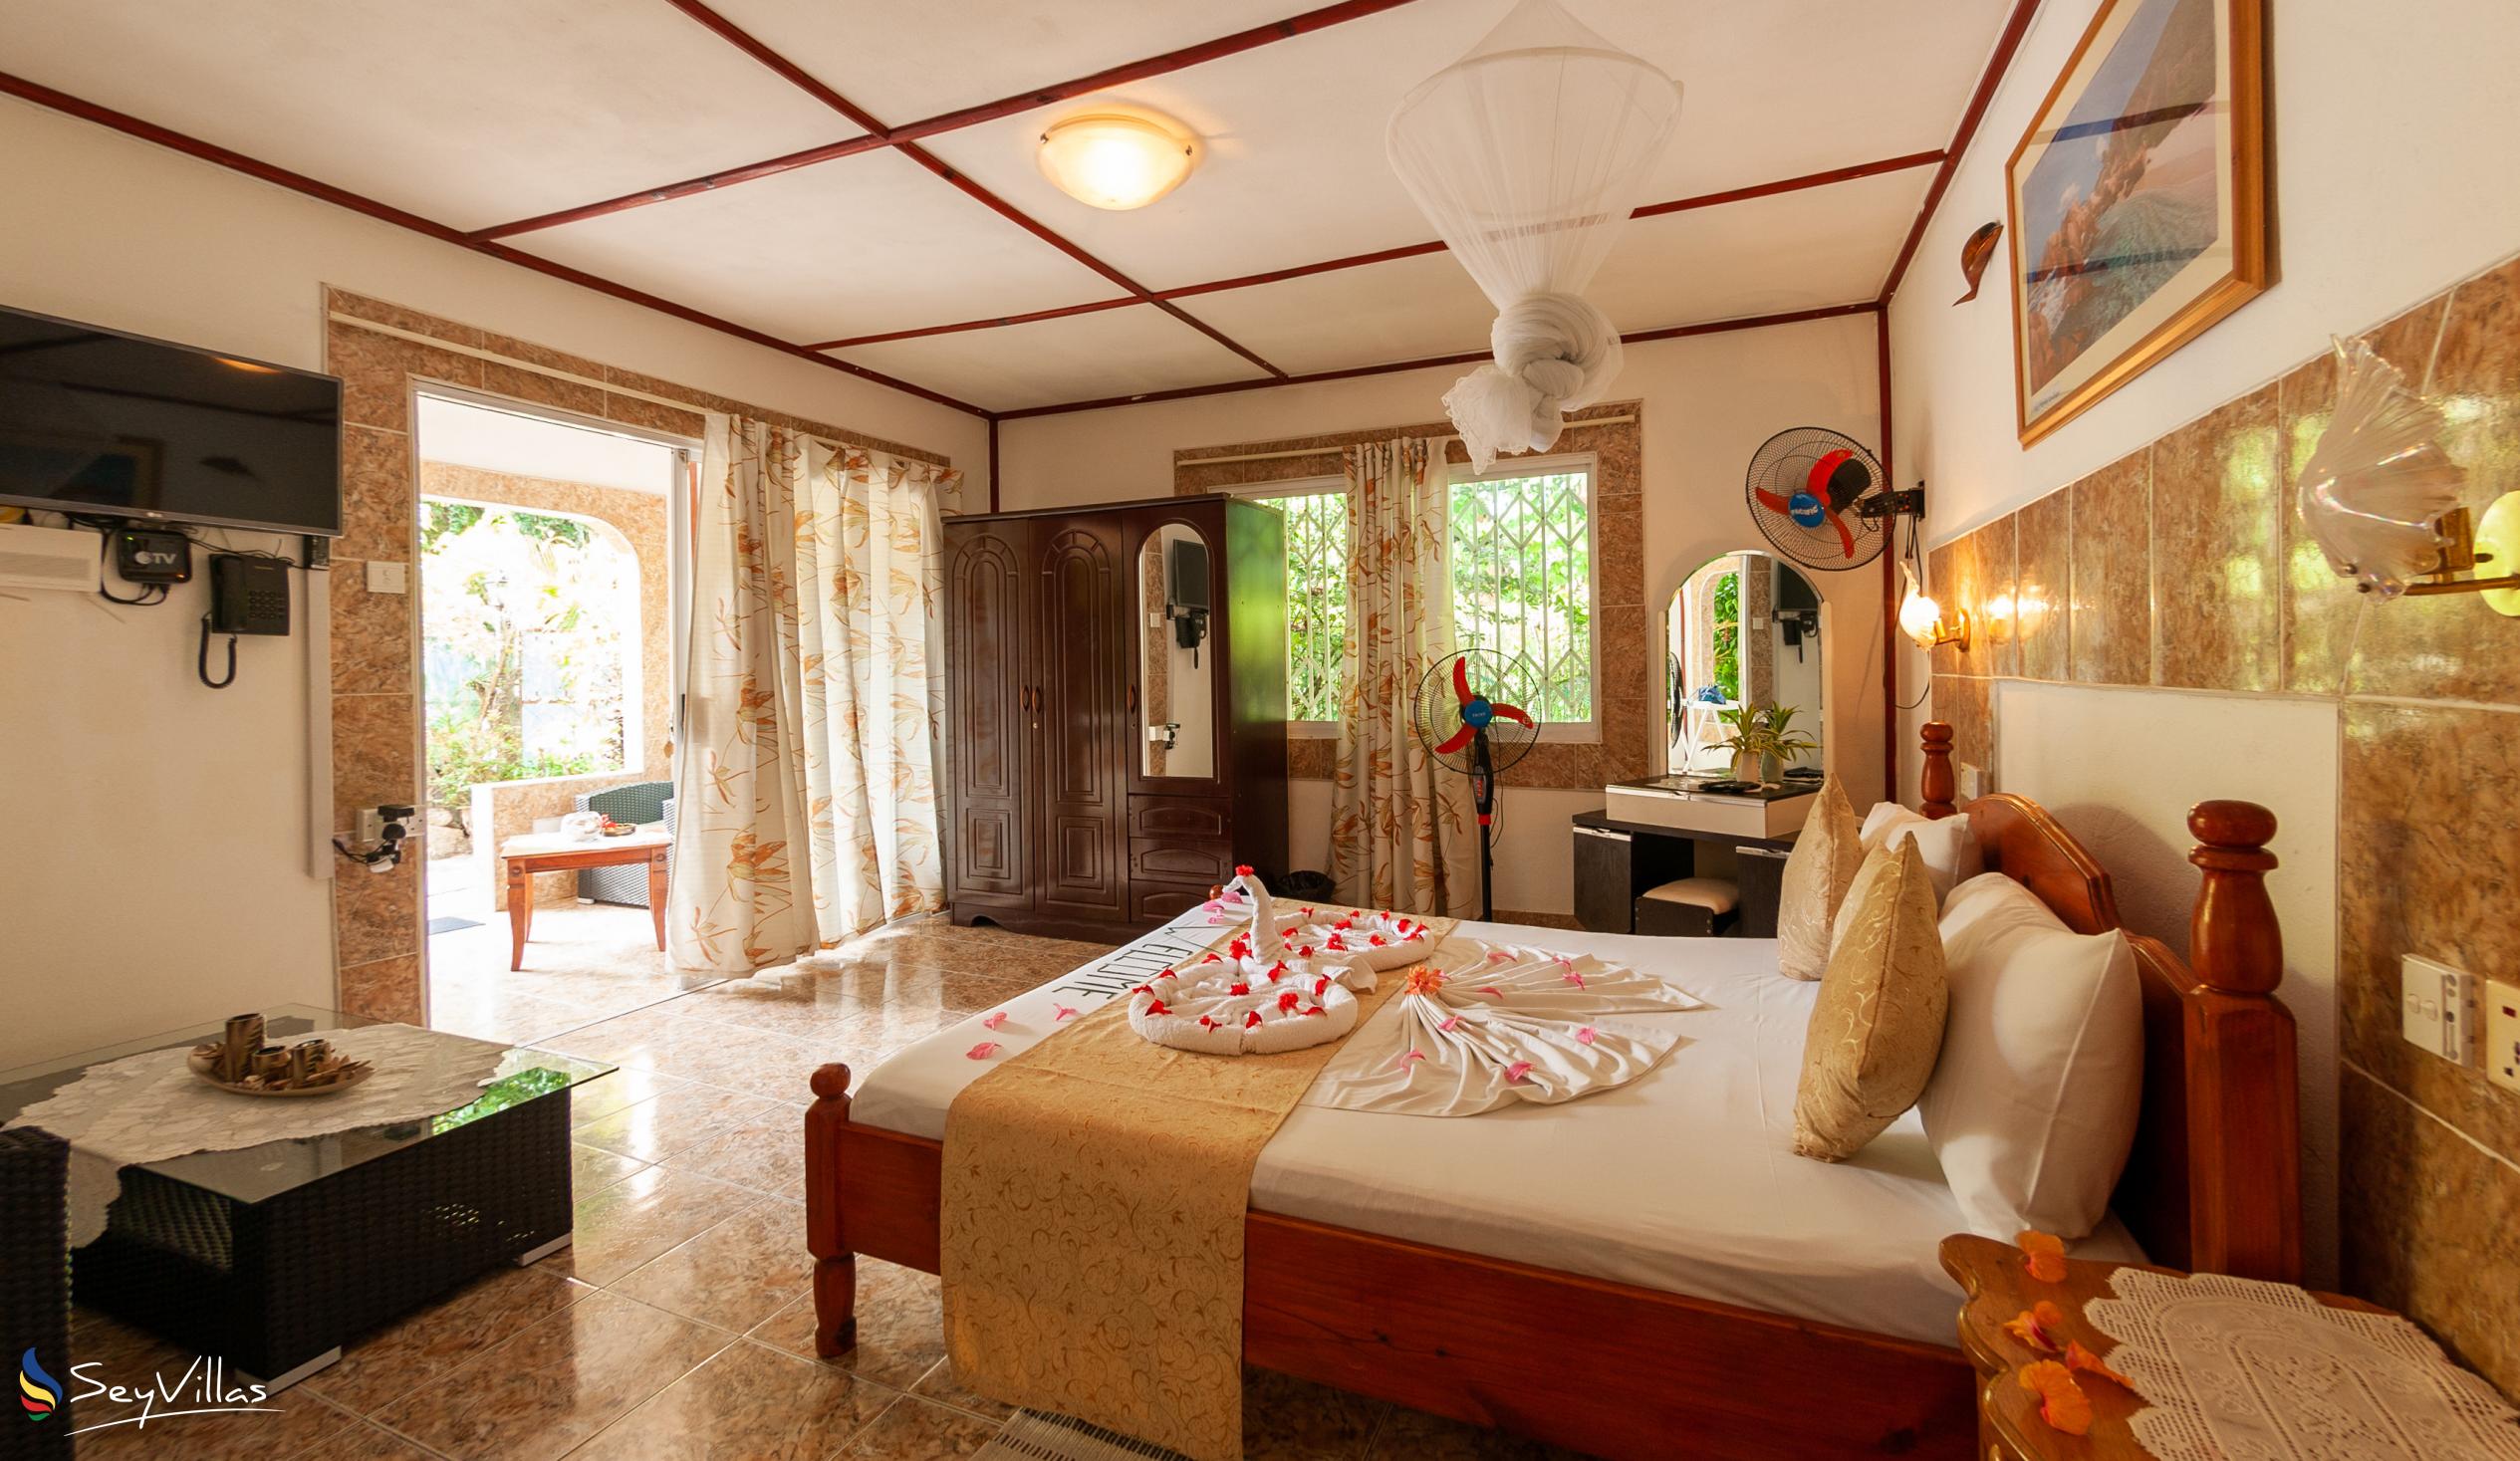 Foto 99: Rising Sun Guesthouse - Camera Standard - La Digue (Seychelles)